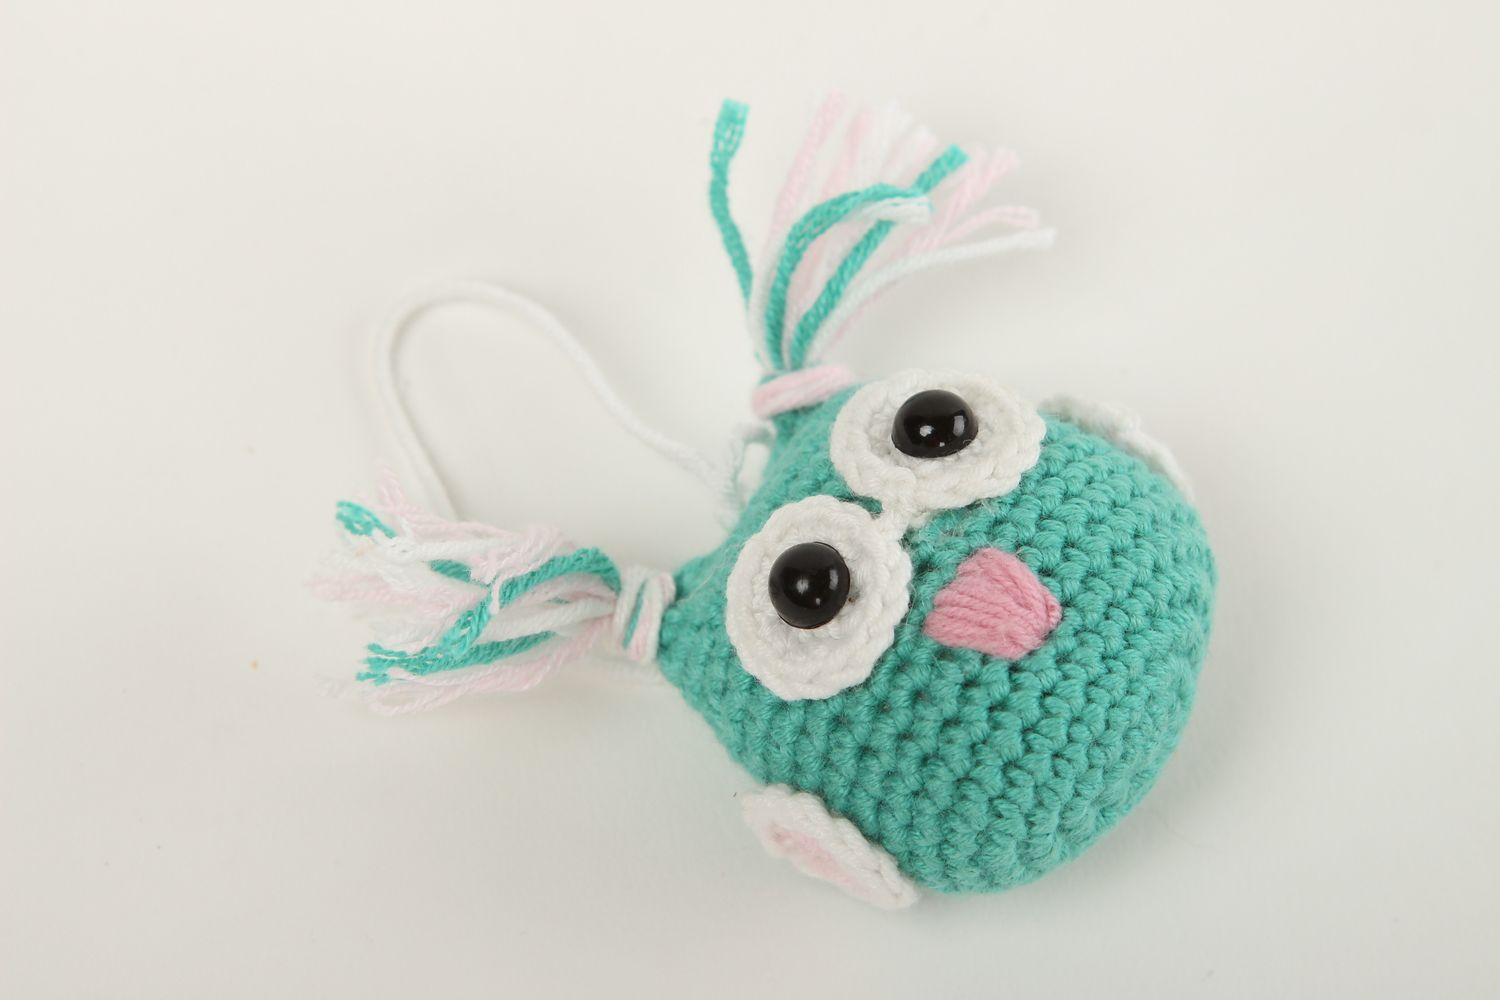 Juguete tejido a crochet hecho a mano muñeco de ganchillo regalo original foto 2